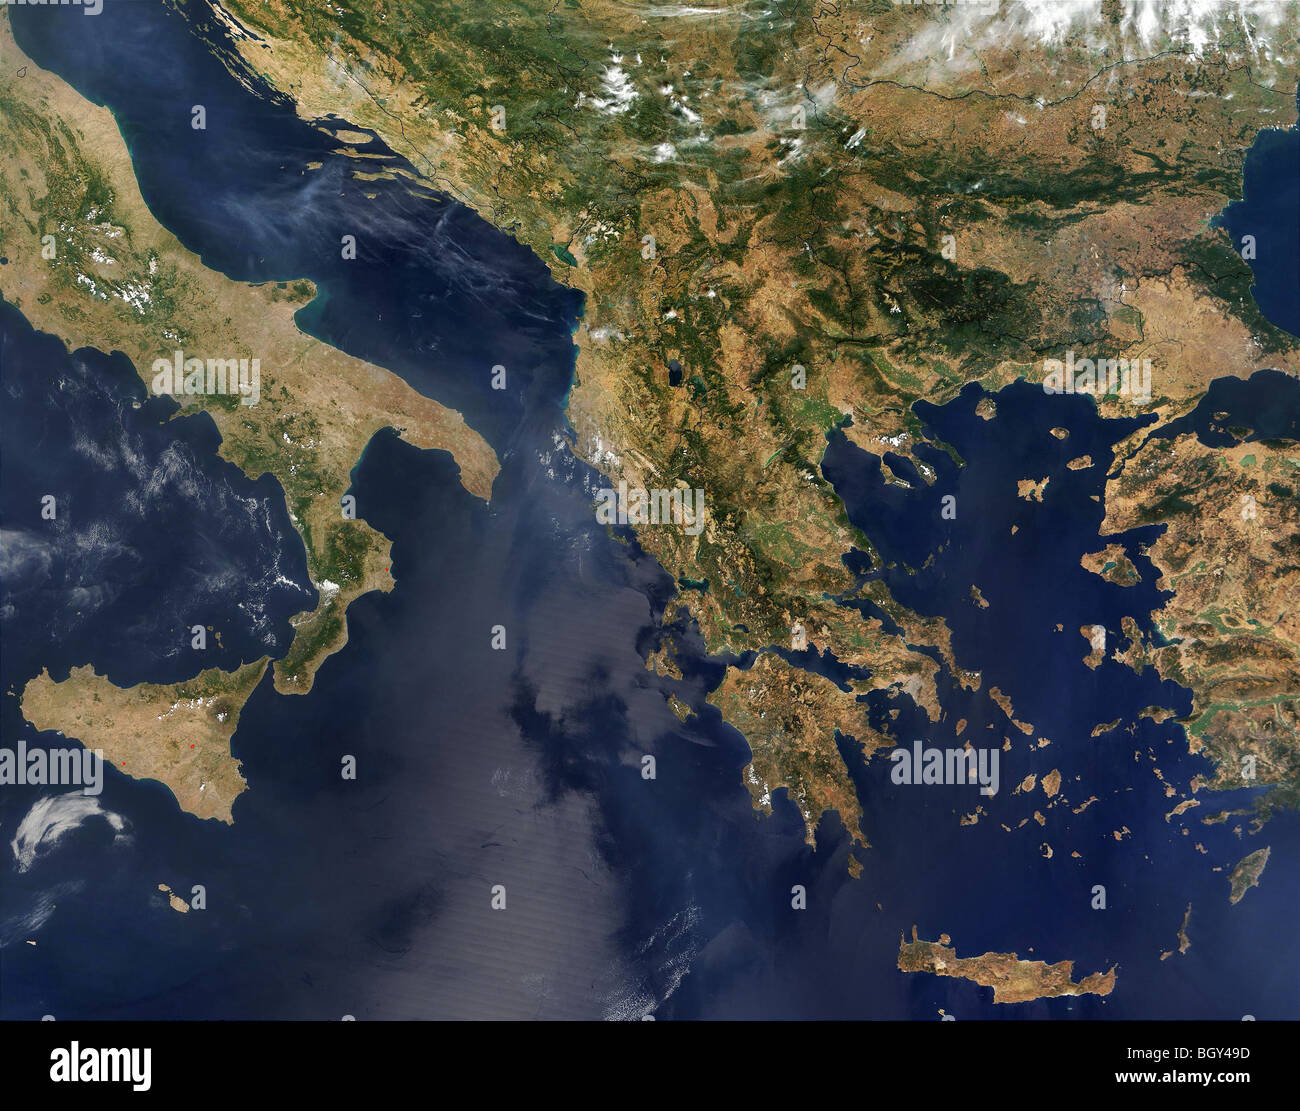 The Balkans Italy Sicily Greece Aegean Sea Crete Turkey seen from space Stock Photo